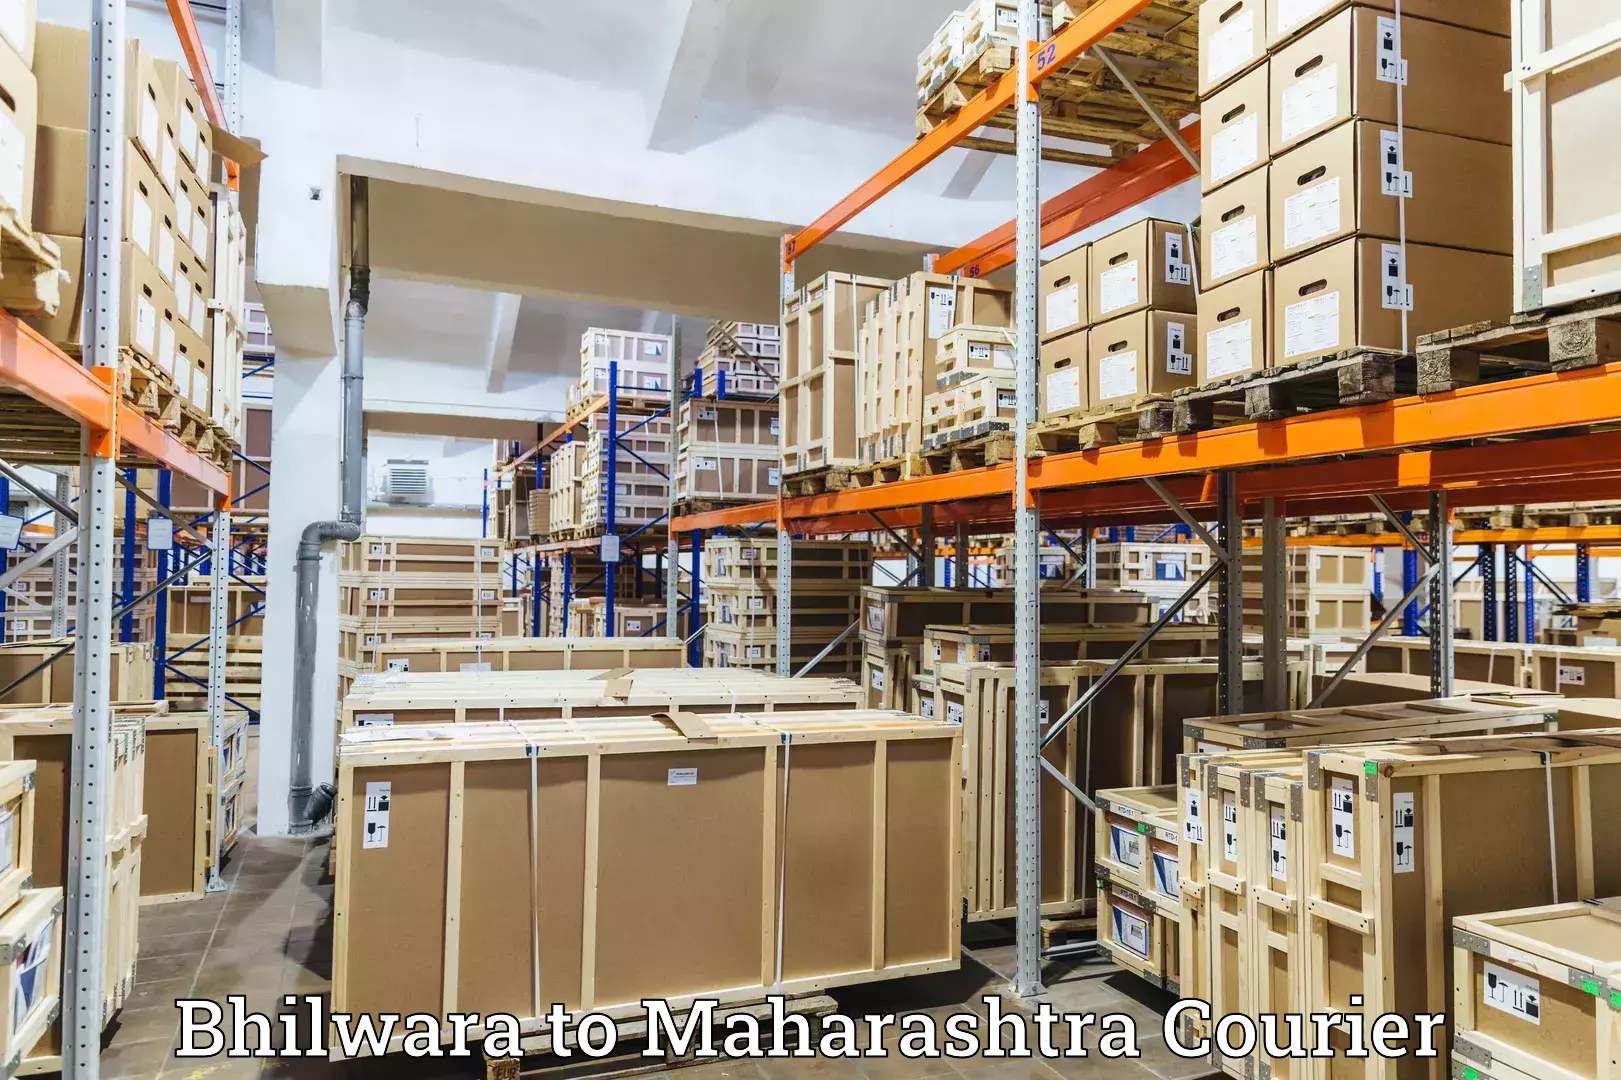 Cargo delivery service Bhilwara to Andheri